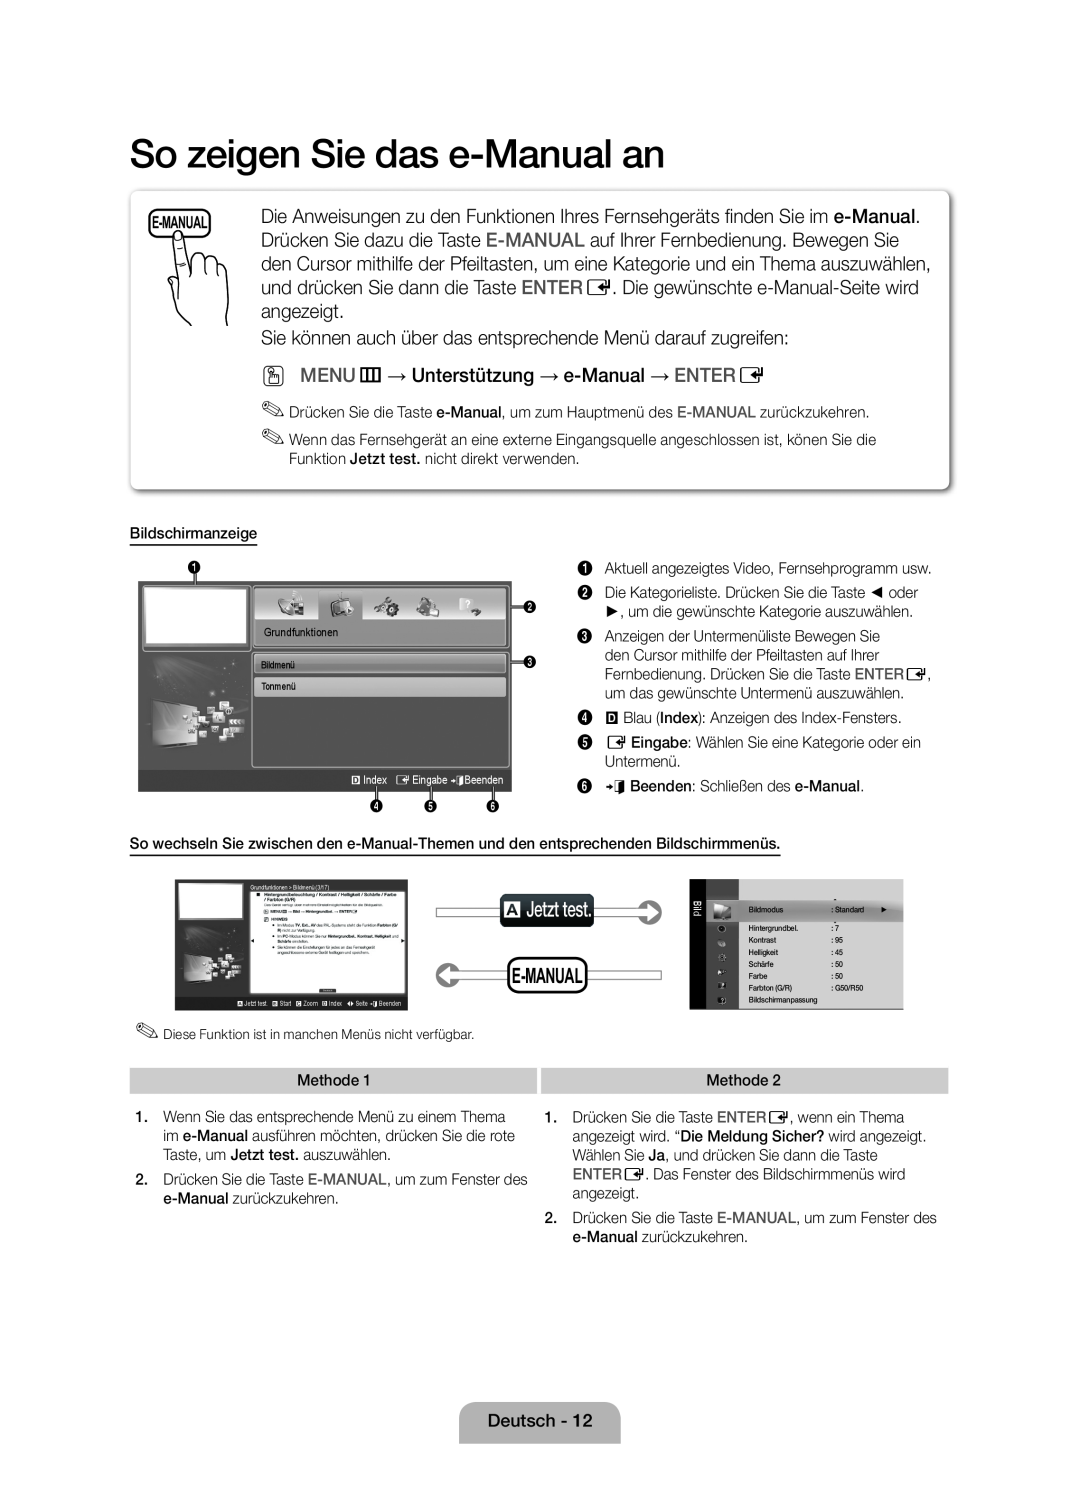 Samsung UE32D4000NWXXN So zeigen Sie das e-Manual an, aJetzt test, angezeigt, OO MENUm→ Unterstützung → e-Manual → ENTERE 